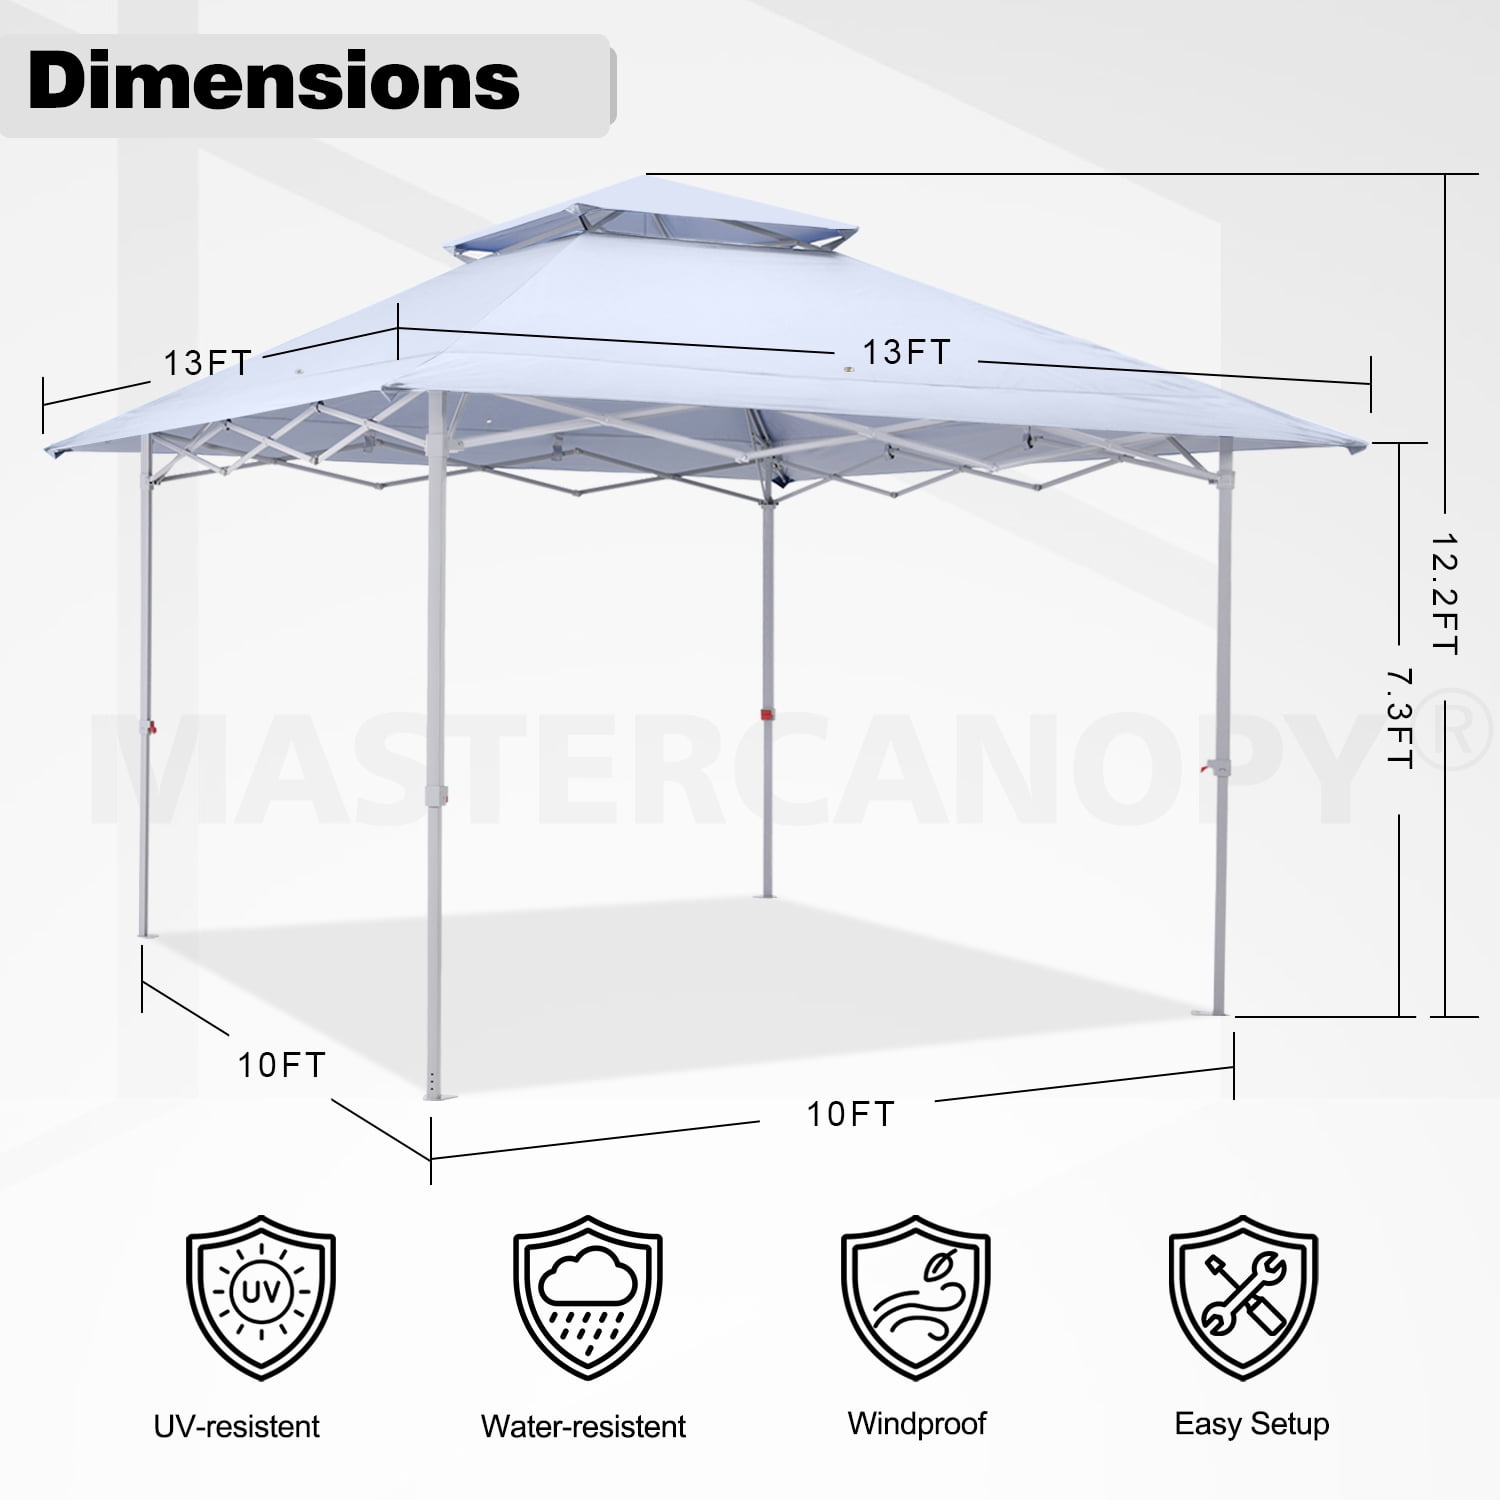 MASTERCANOPY 13' x 13' Pop-Up Canopy Tent Instant Shelter Outdoor Canopy, Dark Gray